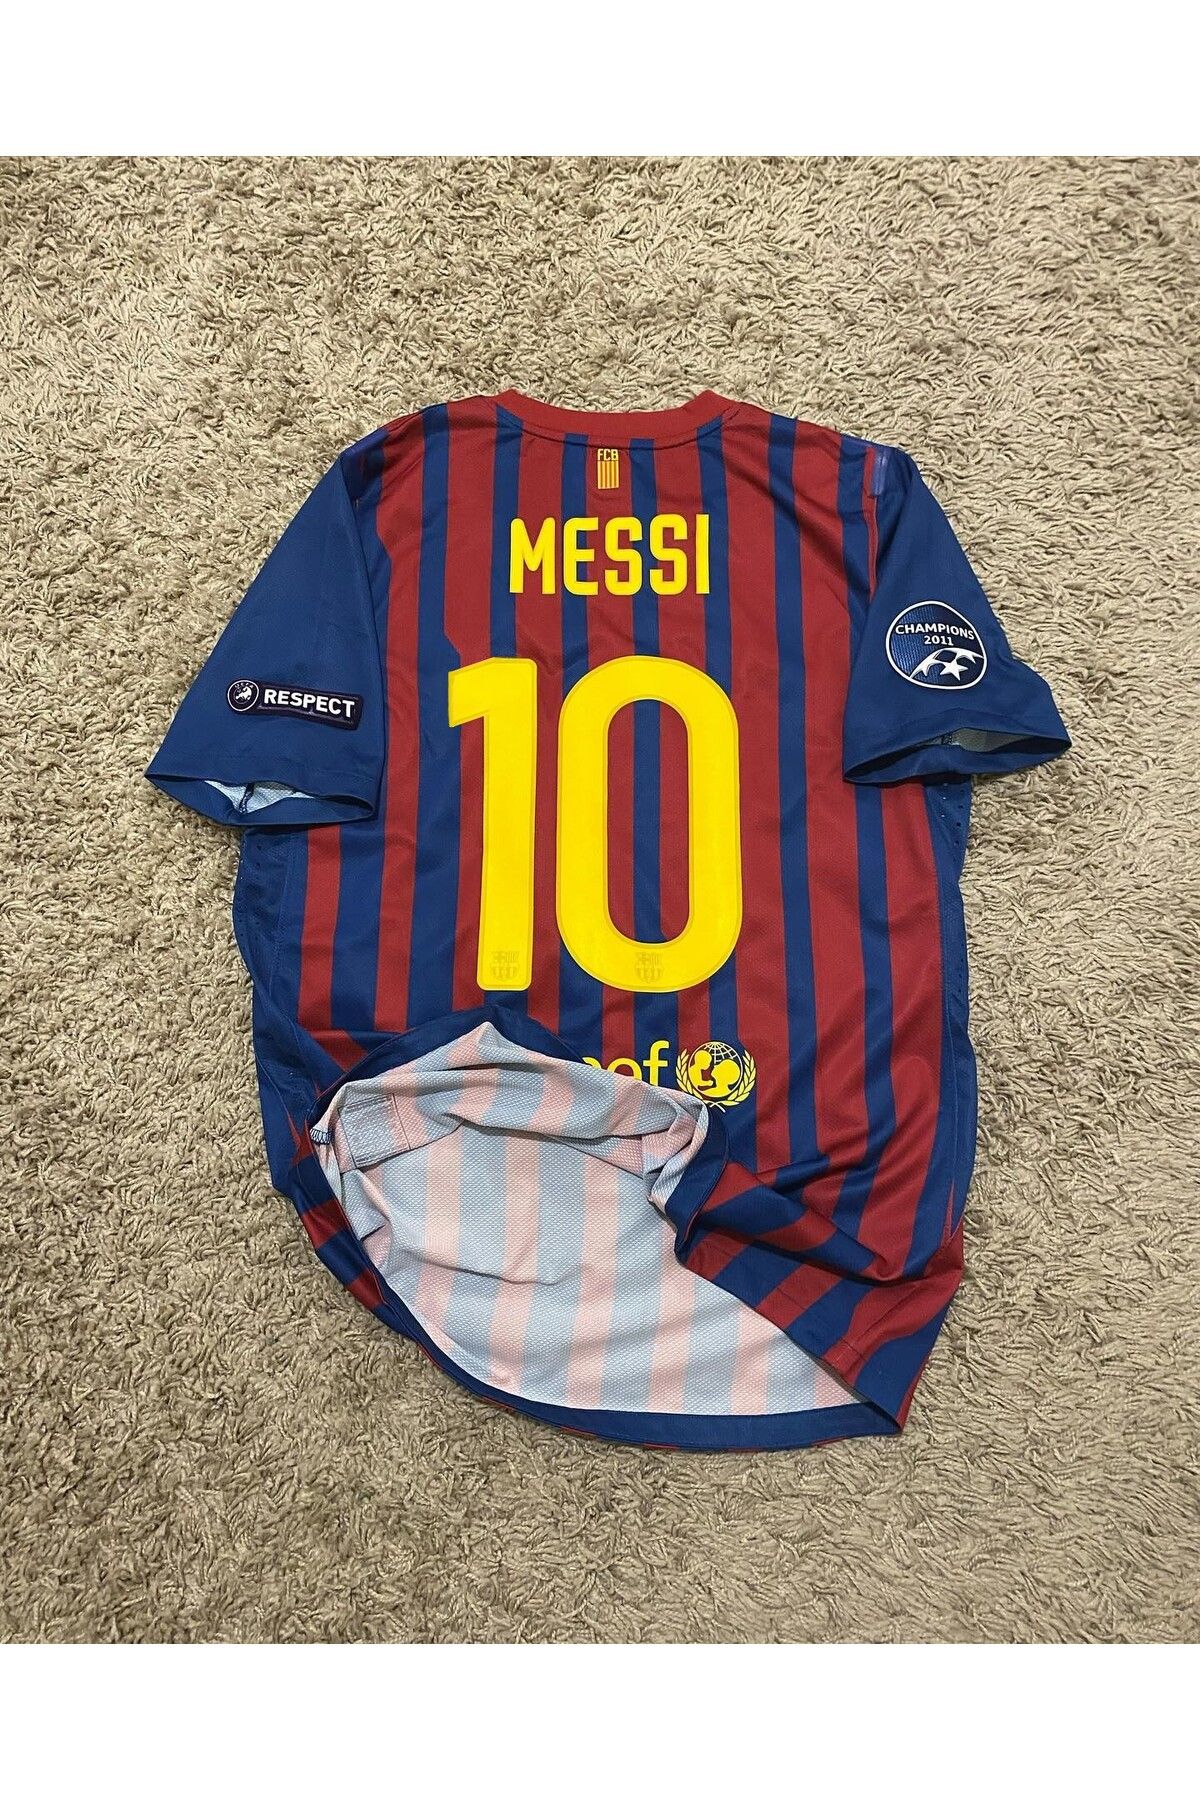 Alaturka Mix Barcelona 2011/12 Sezonu Lionel Messi Nostalji Forması